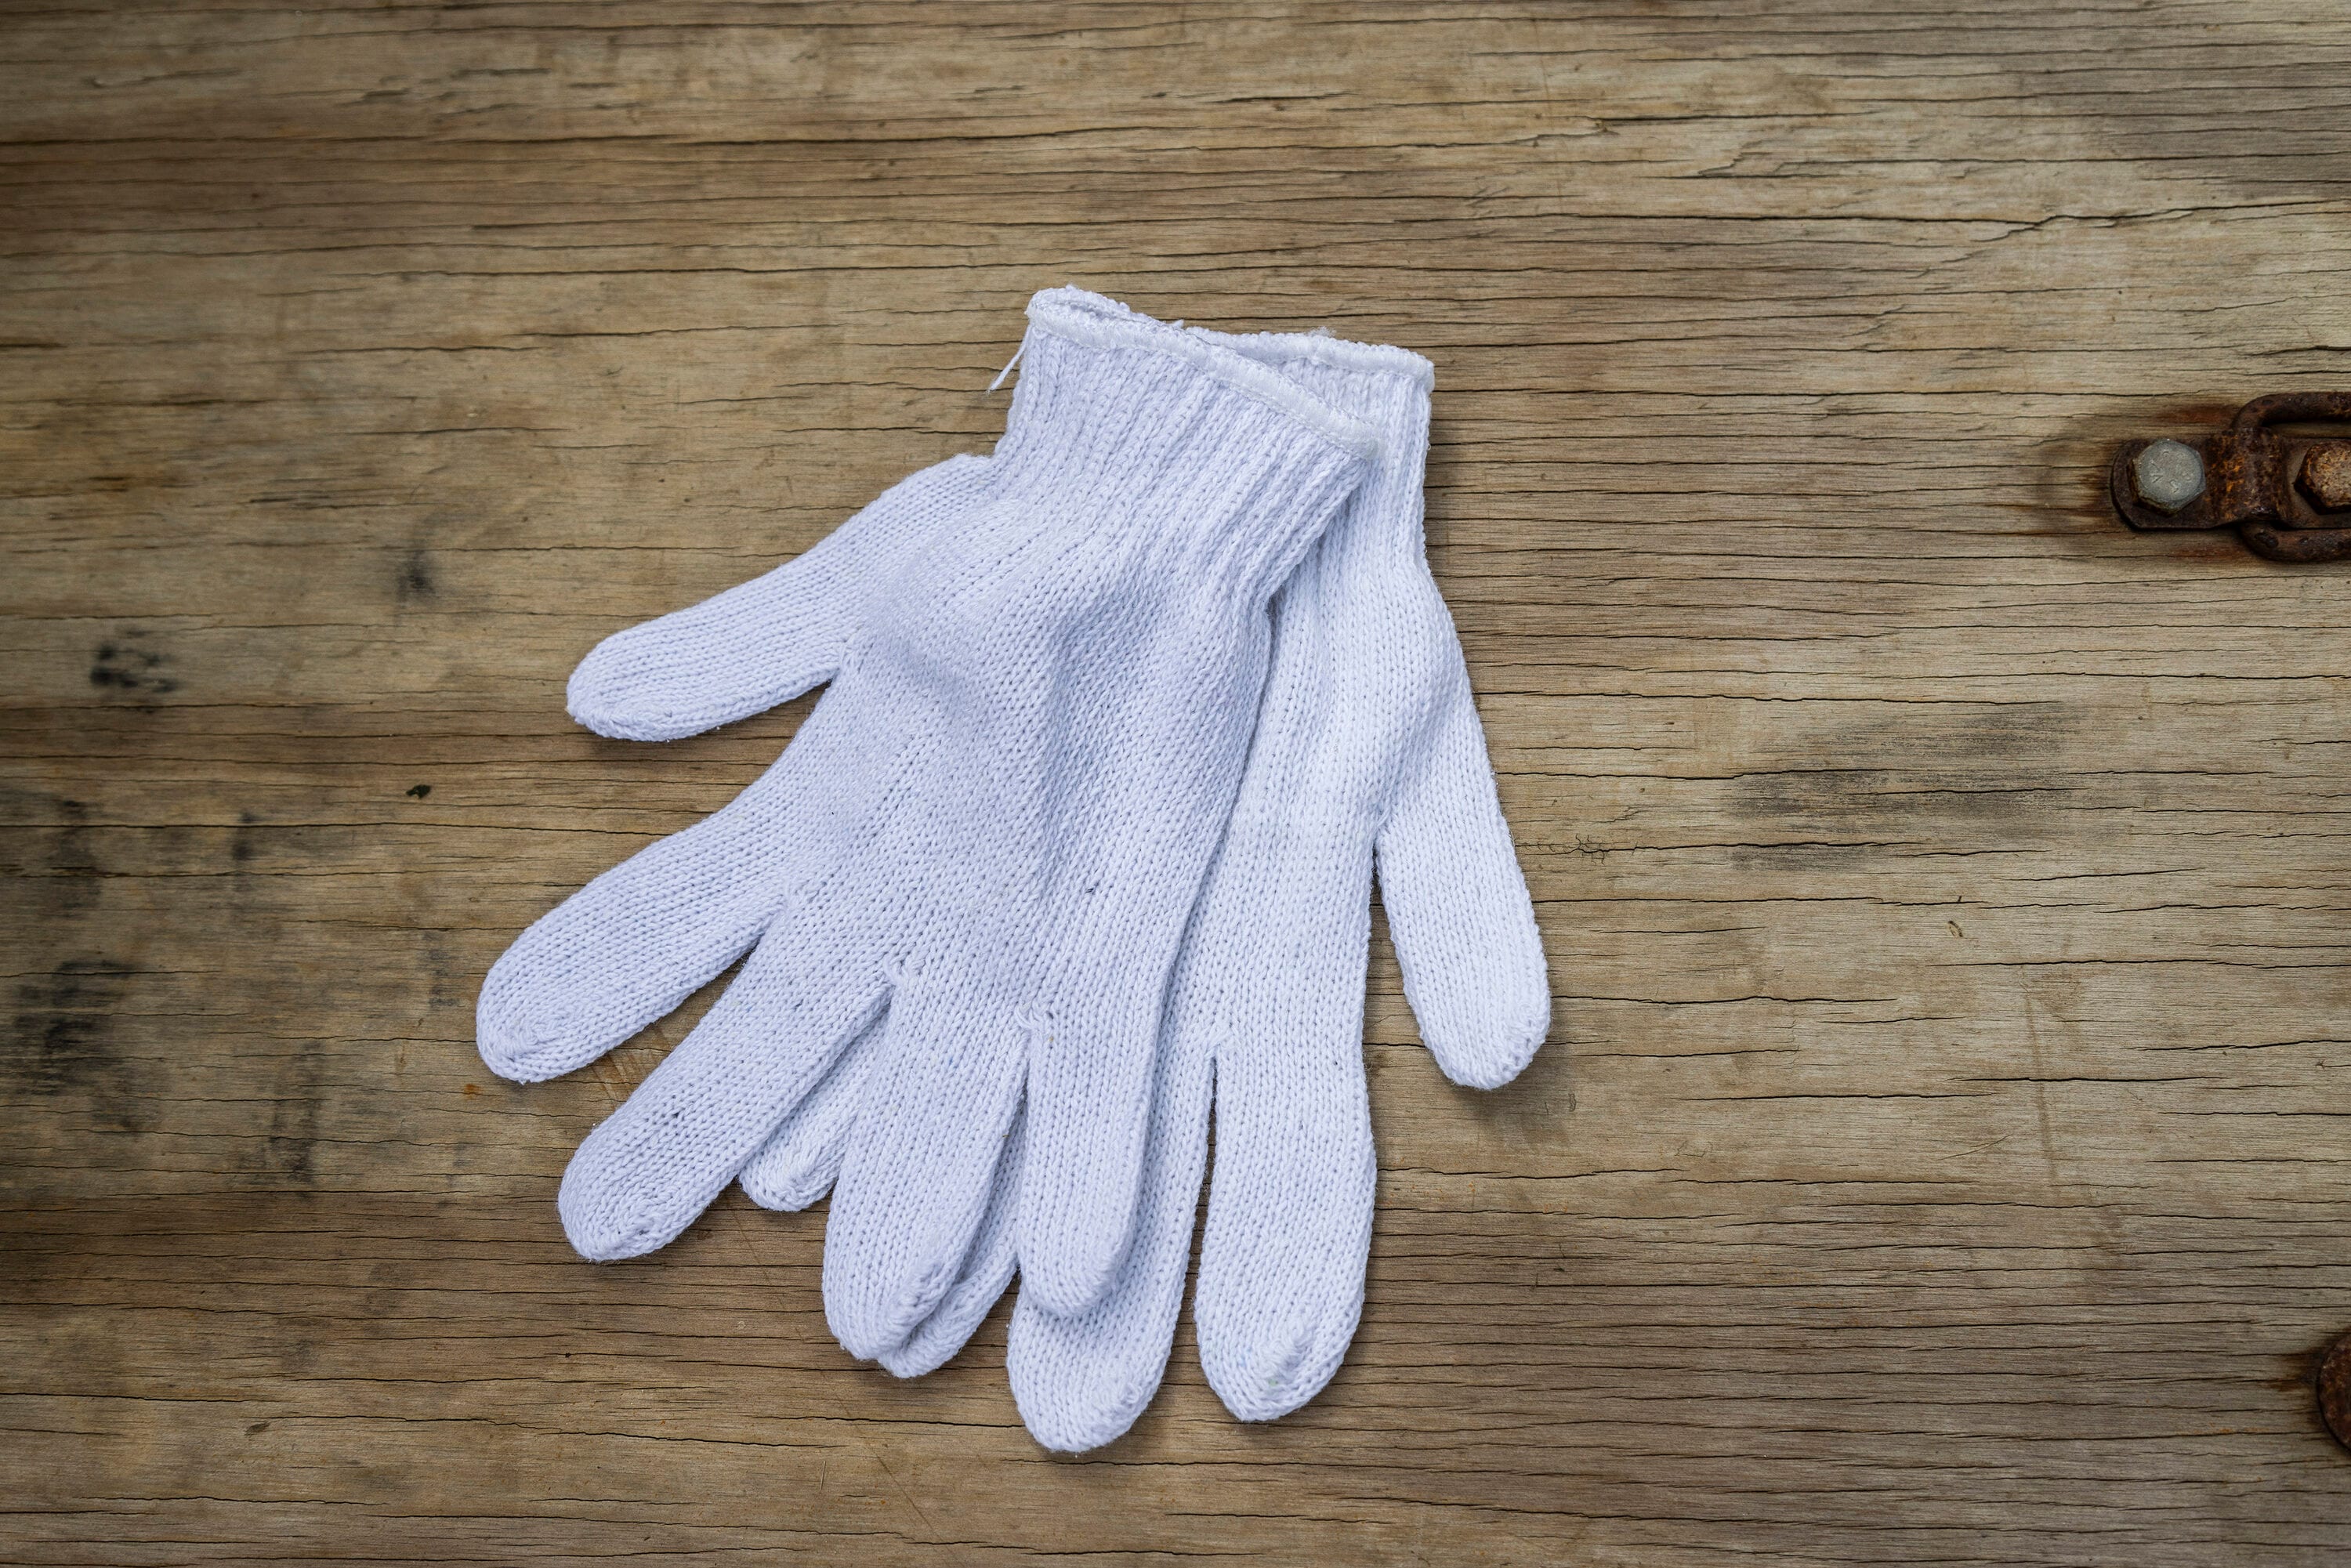 Buy 100% Premium White Cotton Gloves